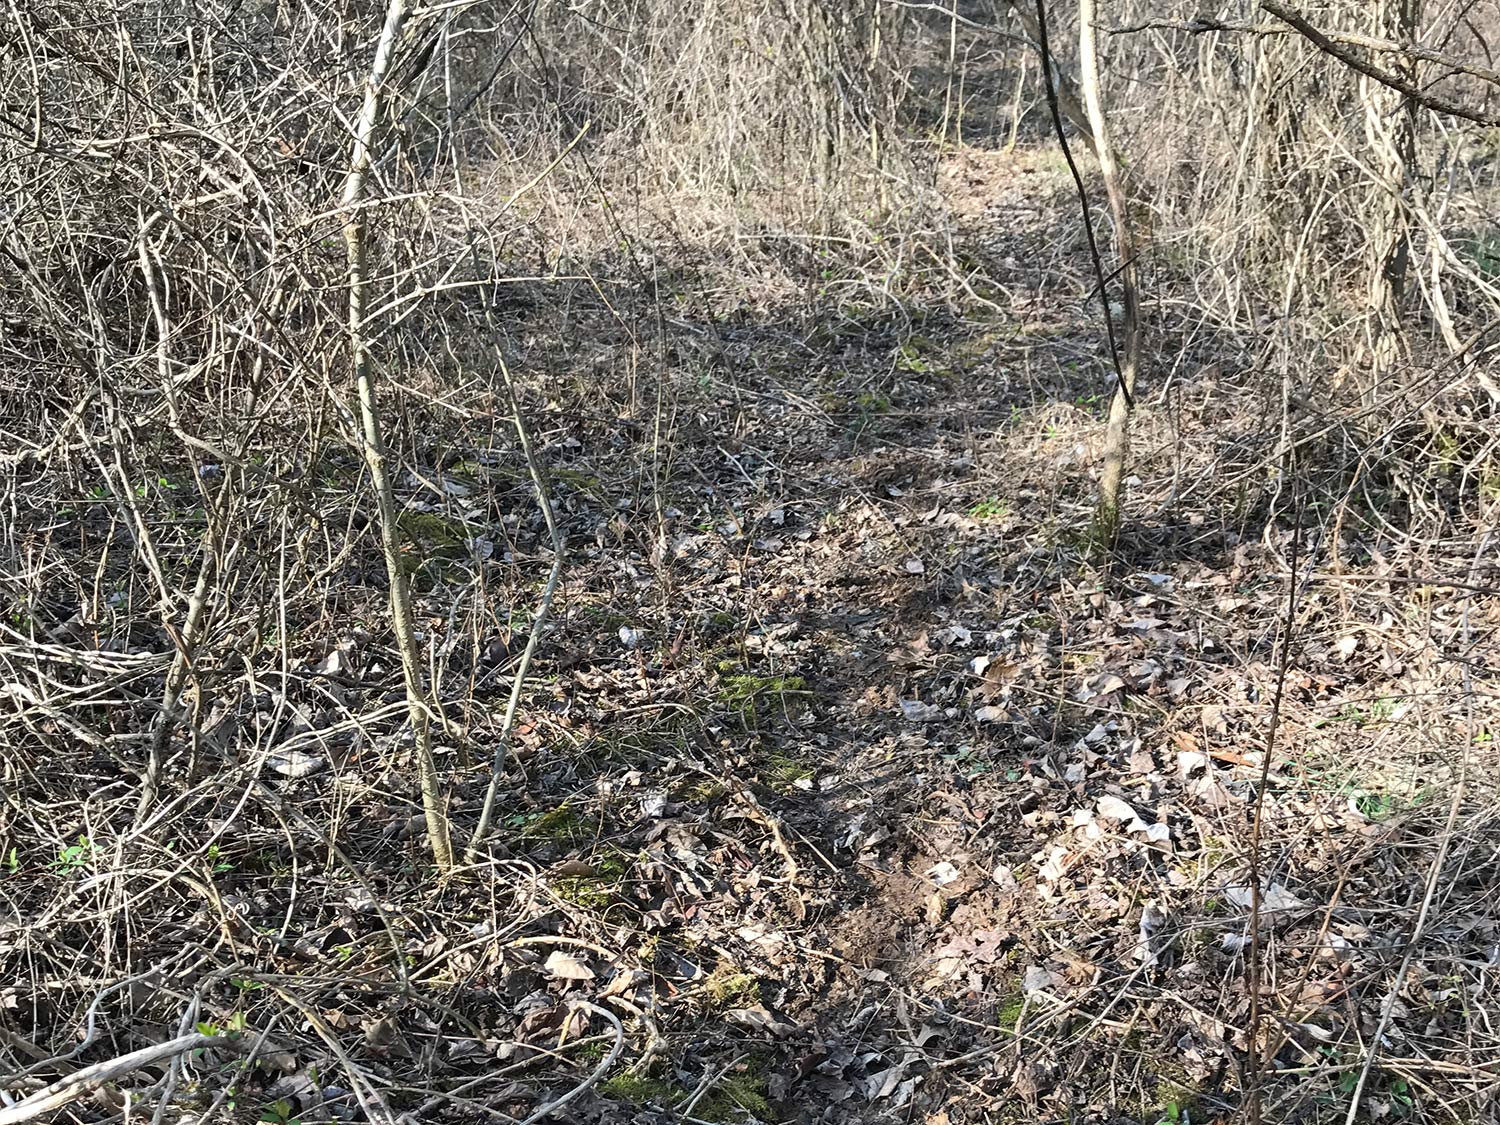 A worn trail through the woods.